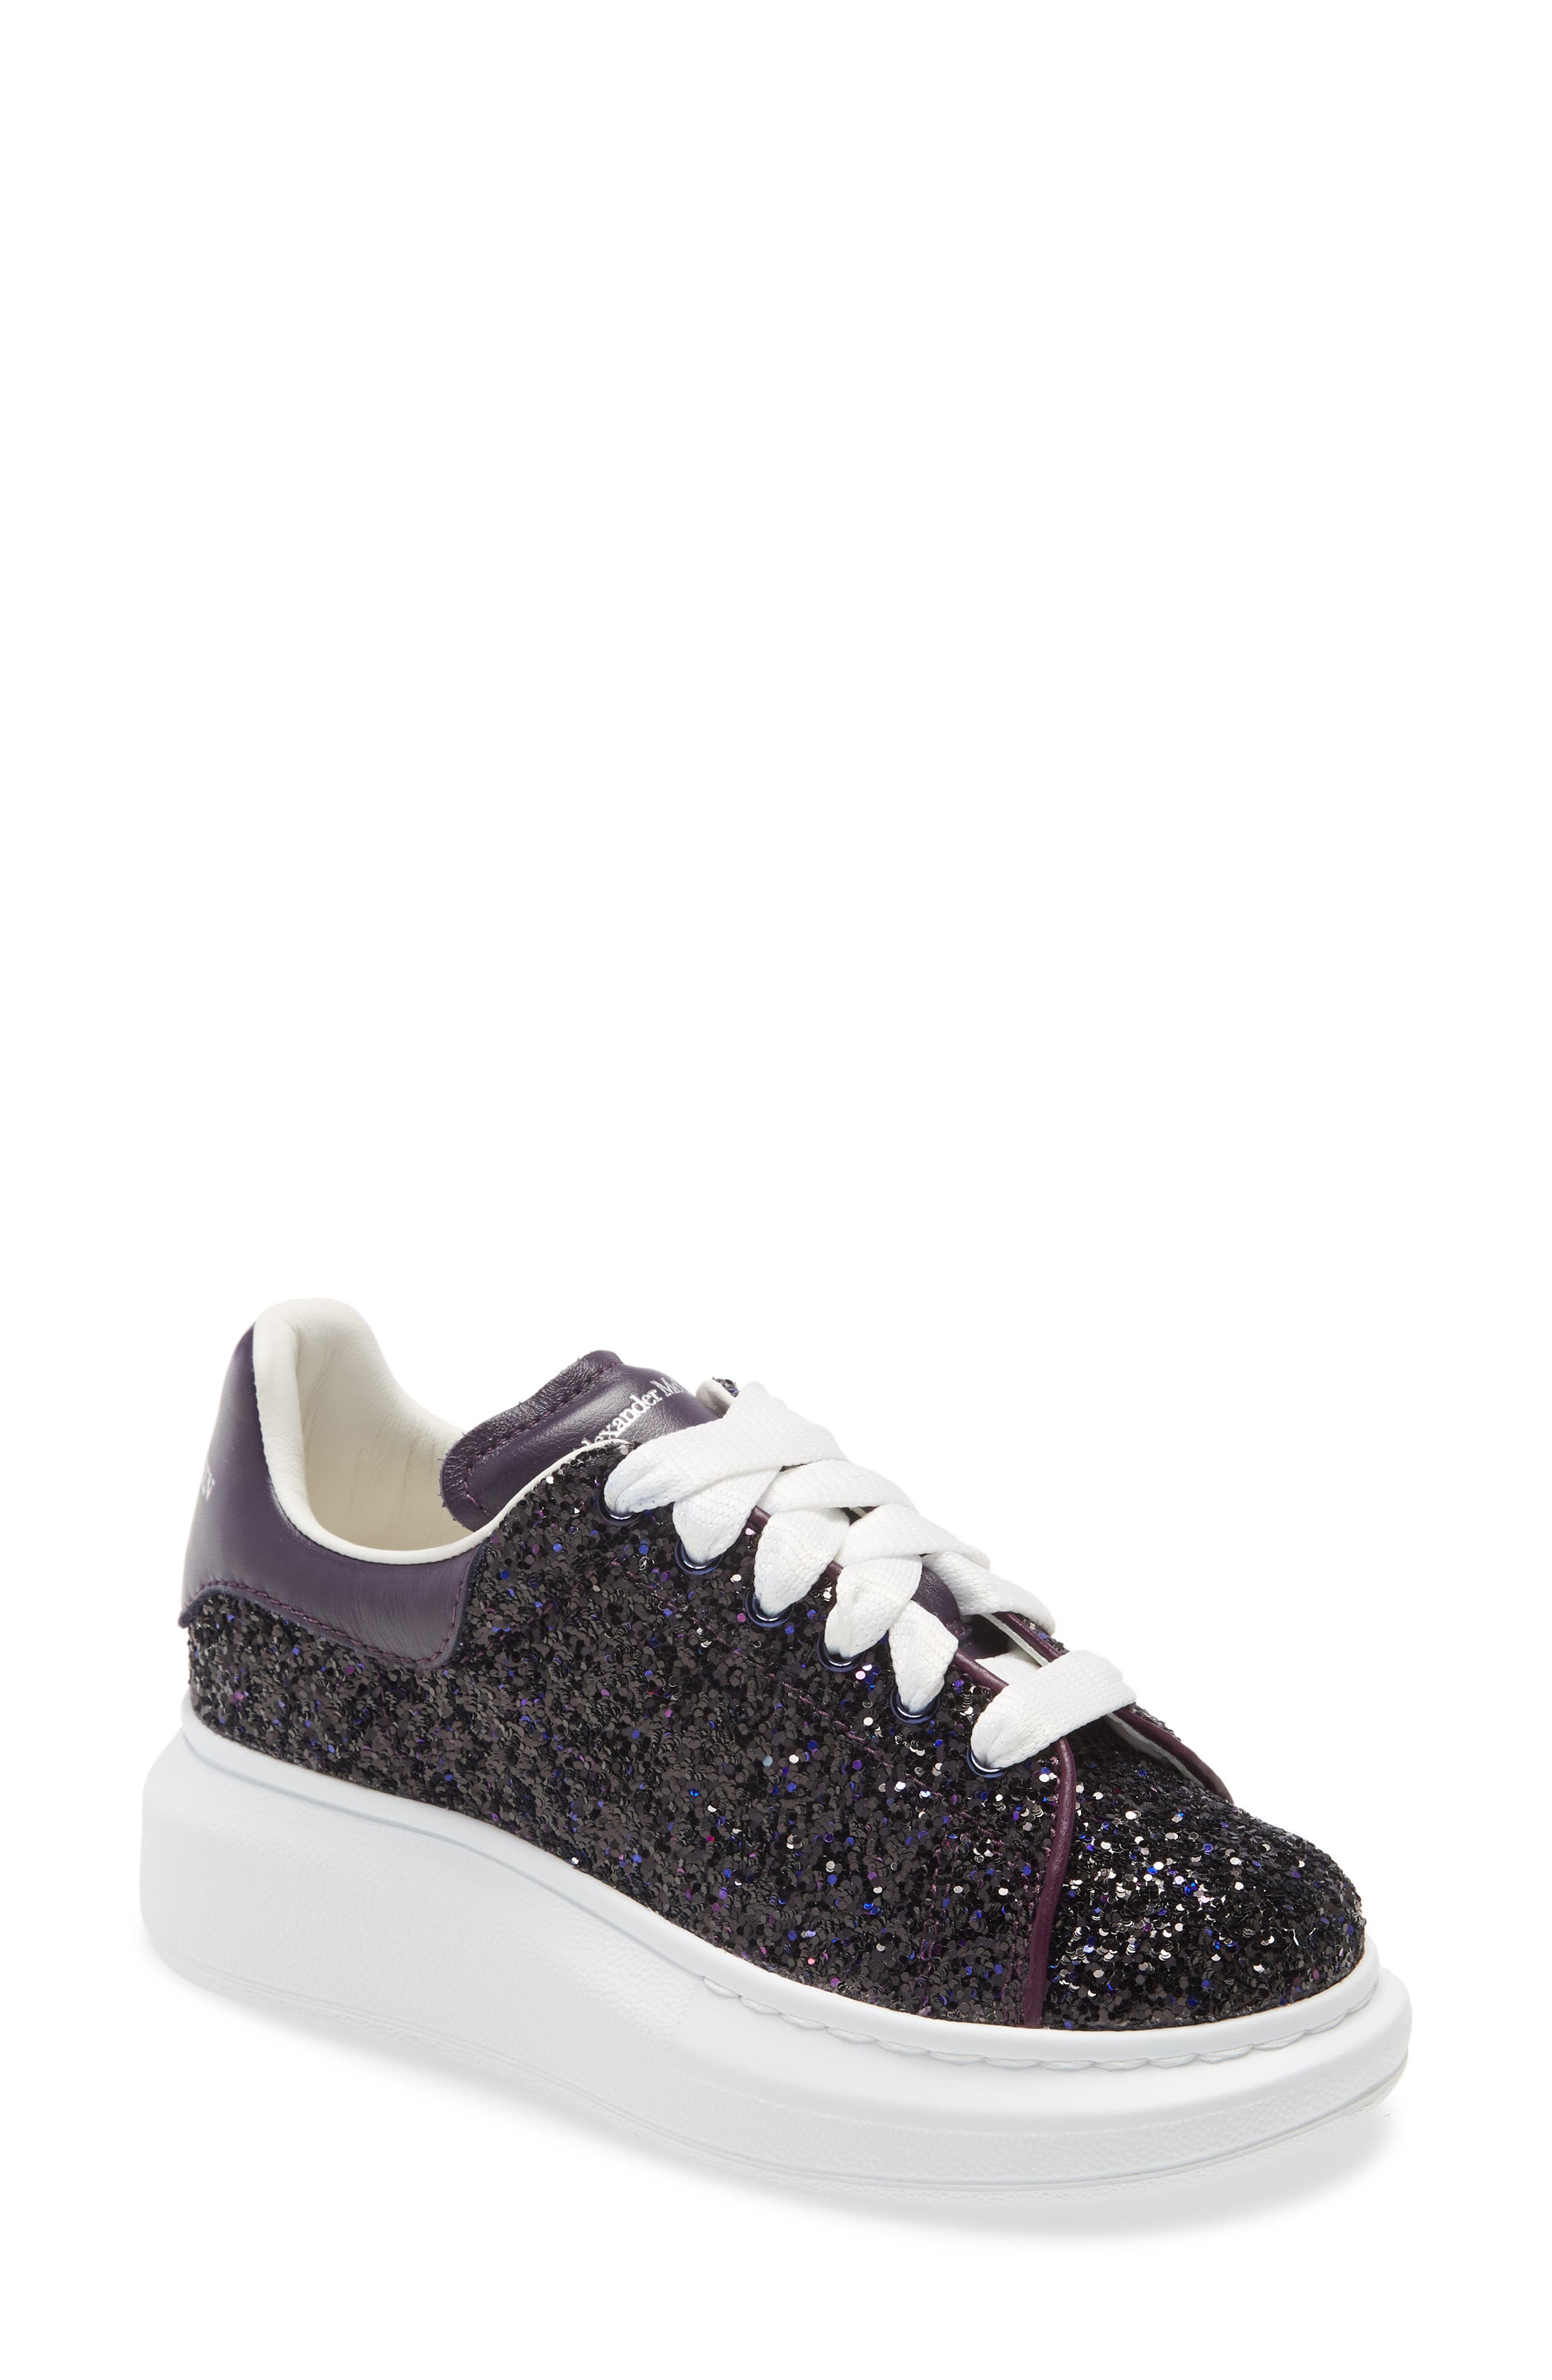 purple sneakers girls